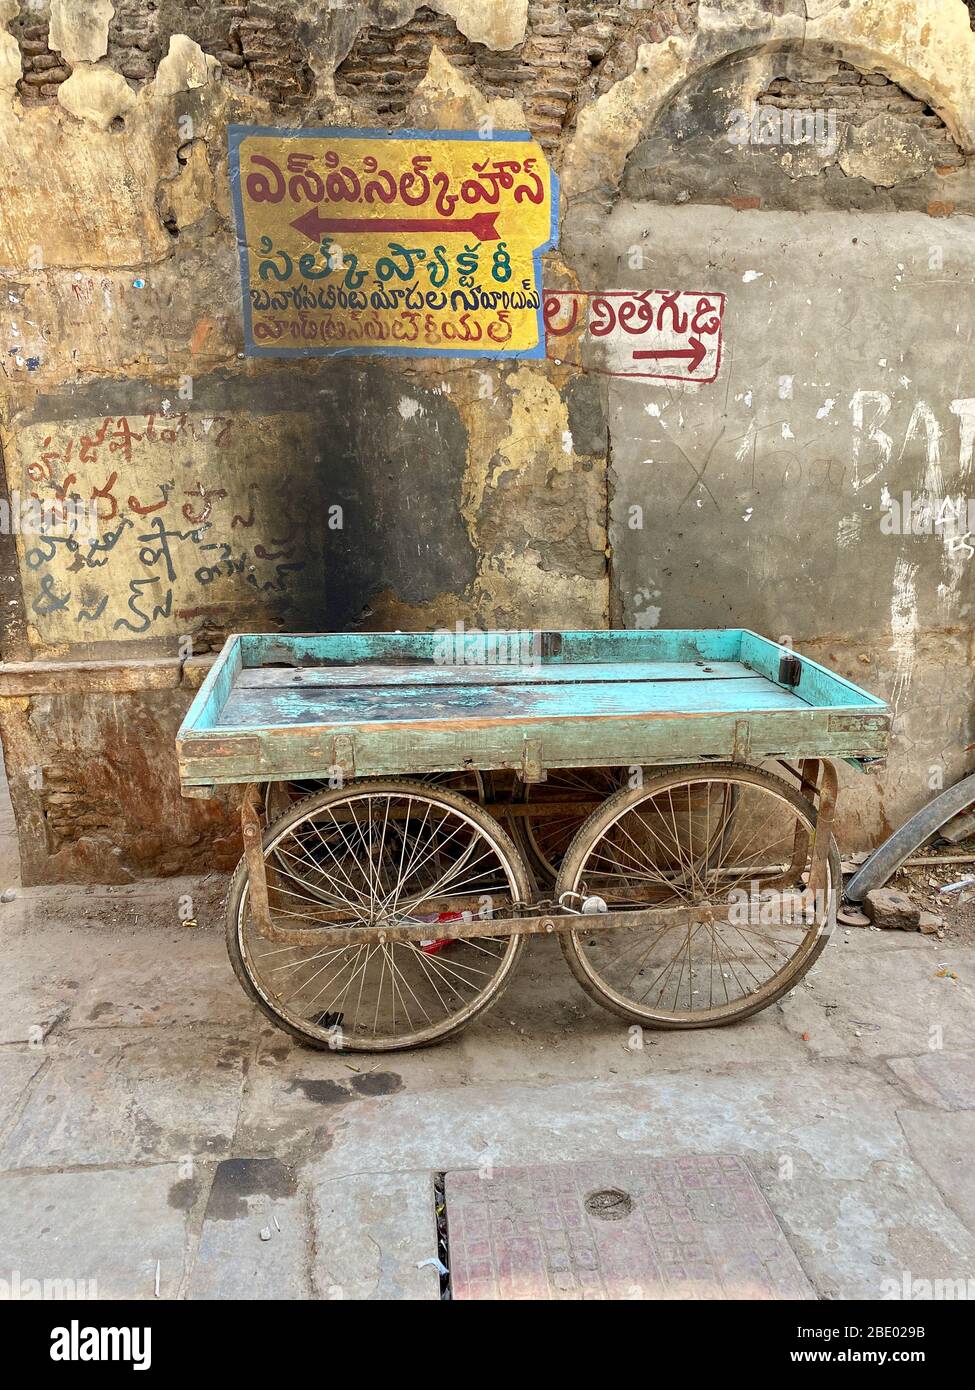 Indian vegetable wagon on street Stock Photo